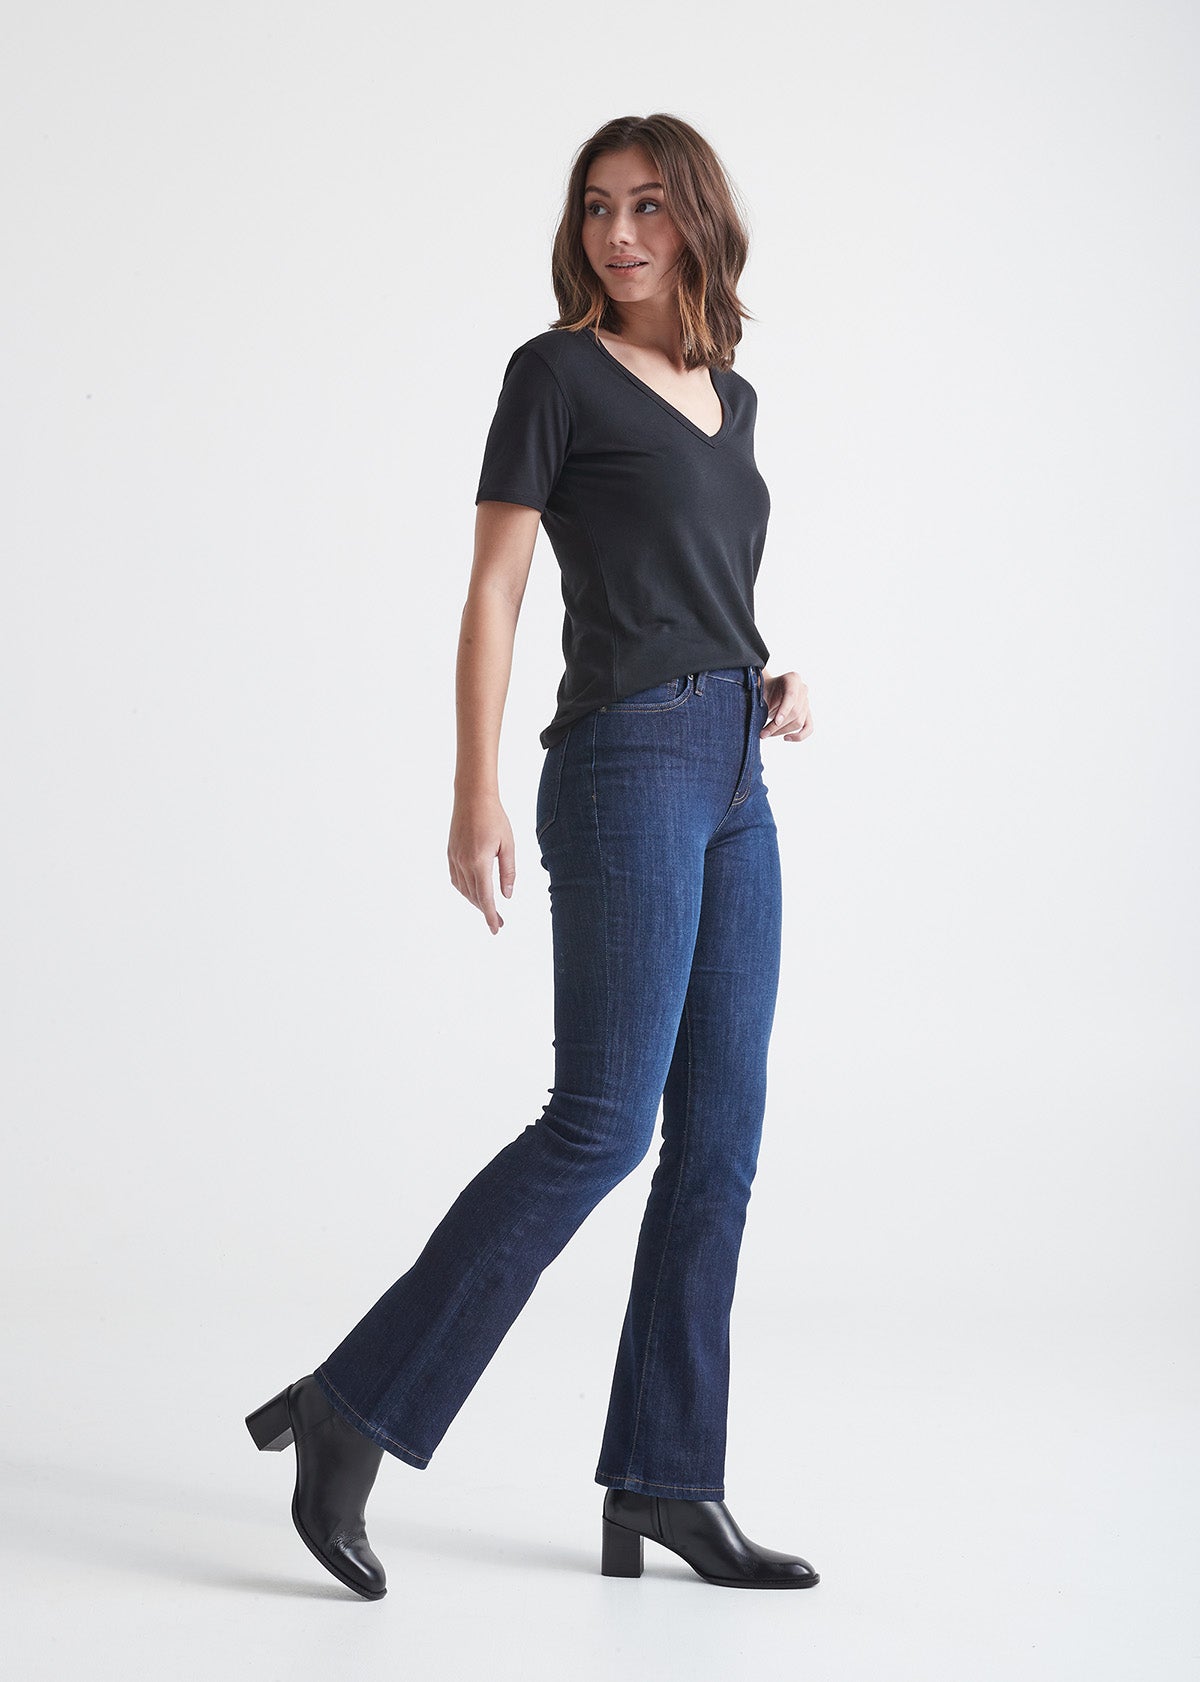 Paige Denim Hidden Hills High Rise Boot Cut jeans in Memphis wash - in